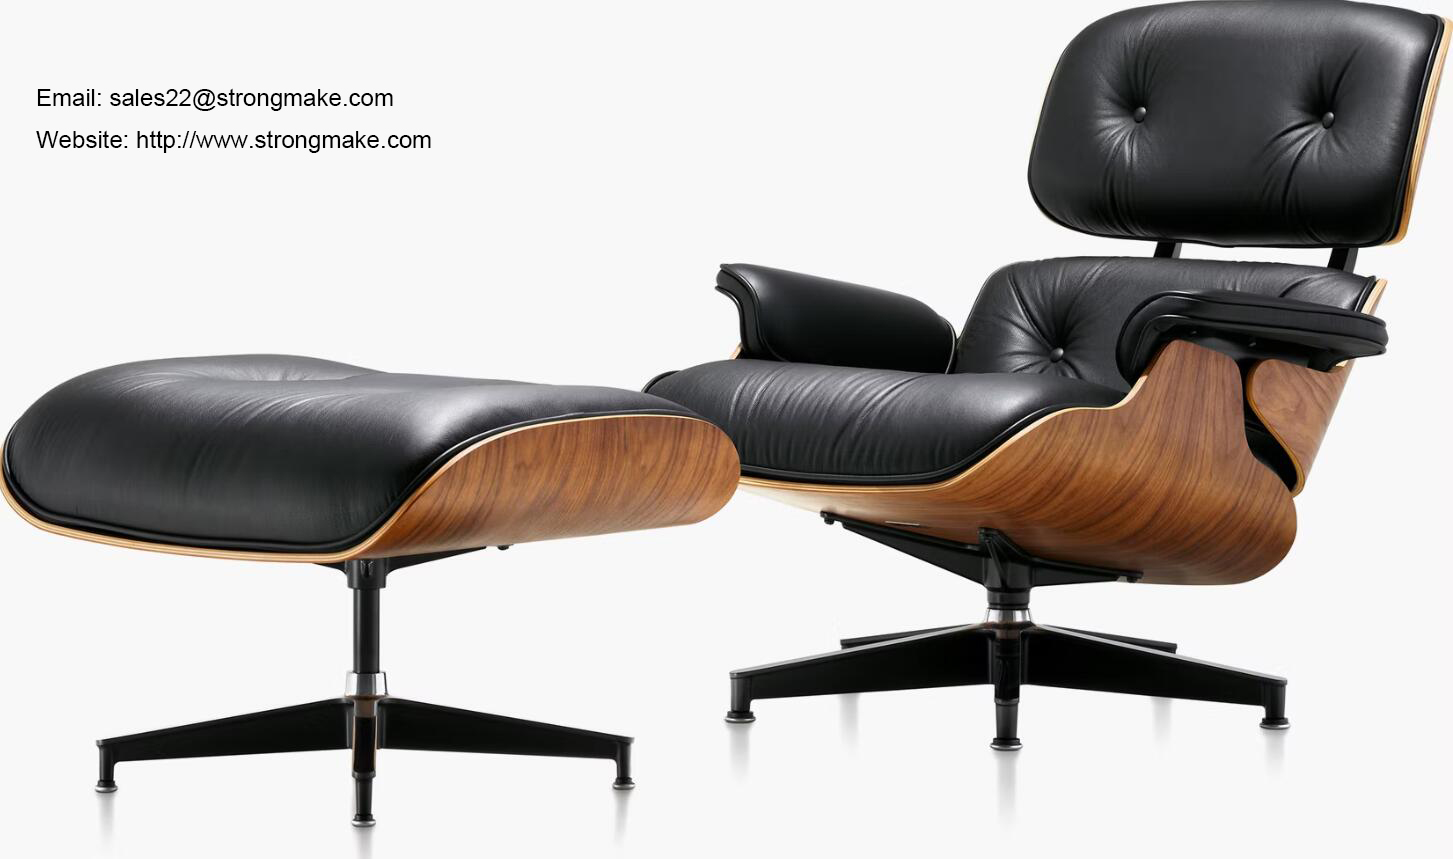 STRONGMAKE 8026 Eames Lounge Chair Replica